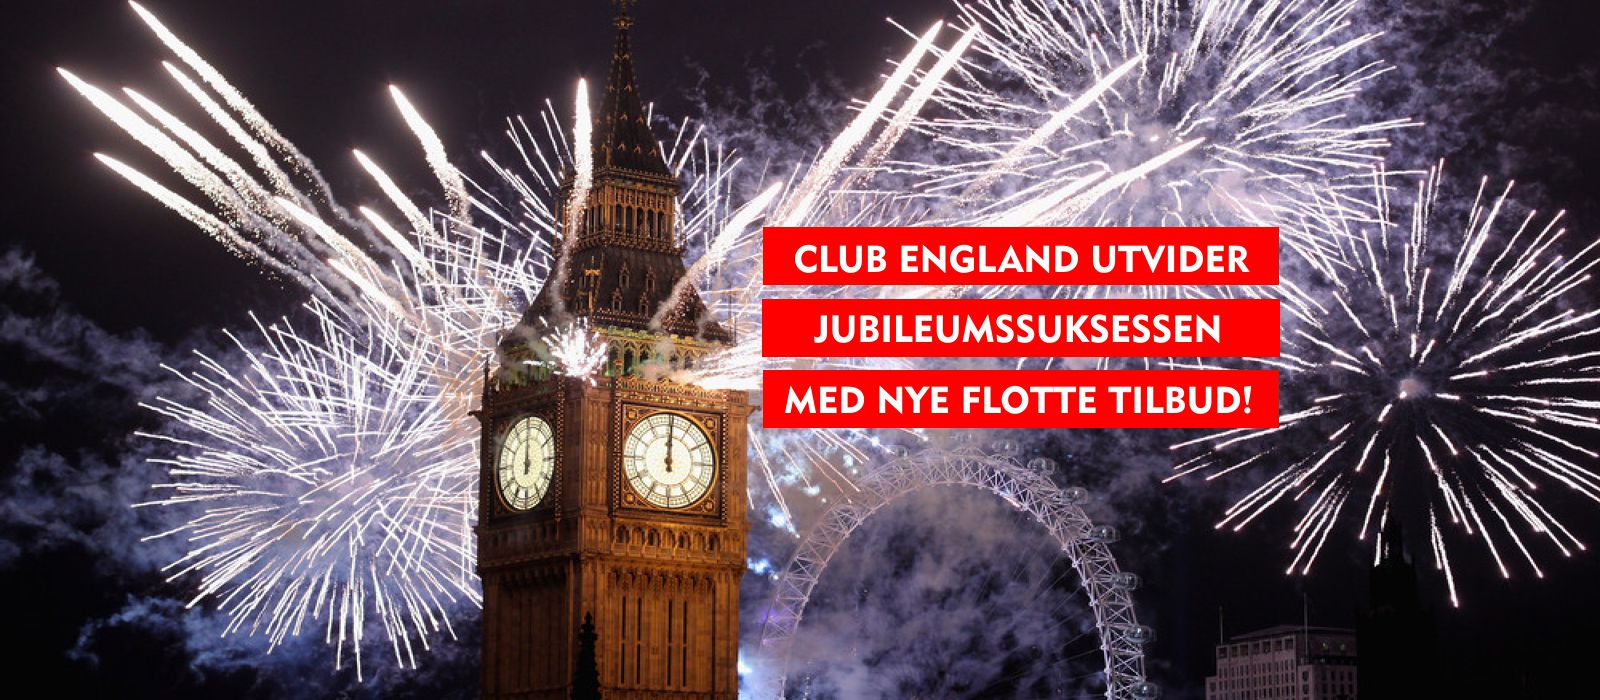 Club England 50 år jubileum